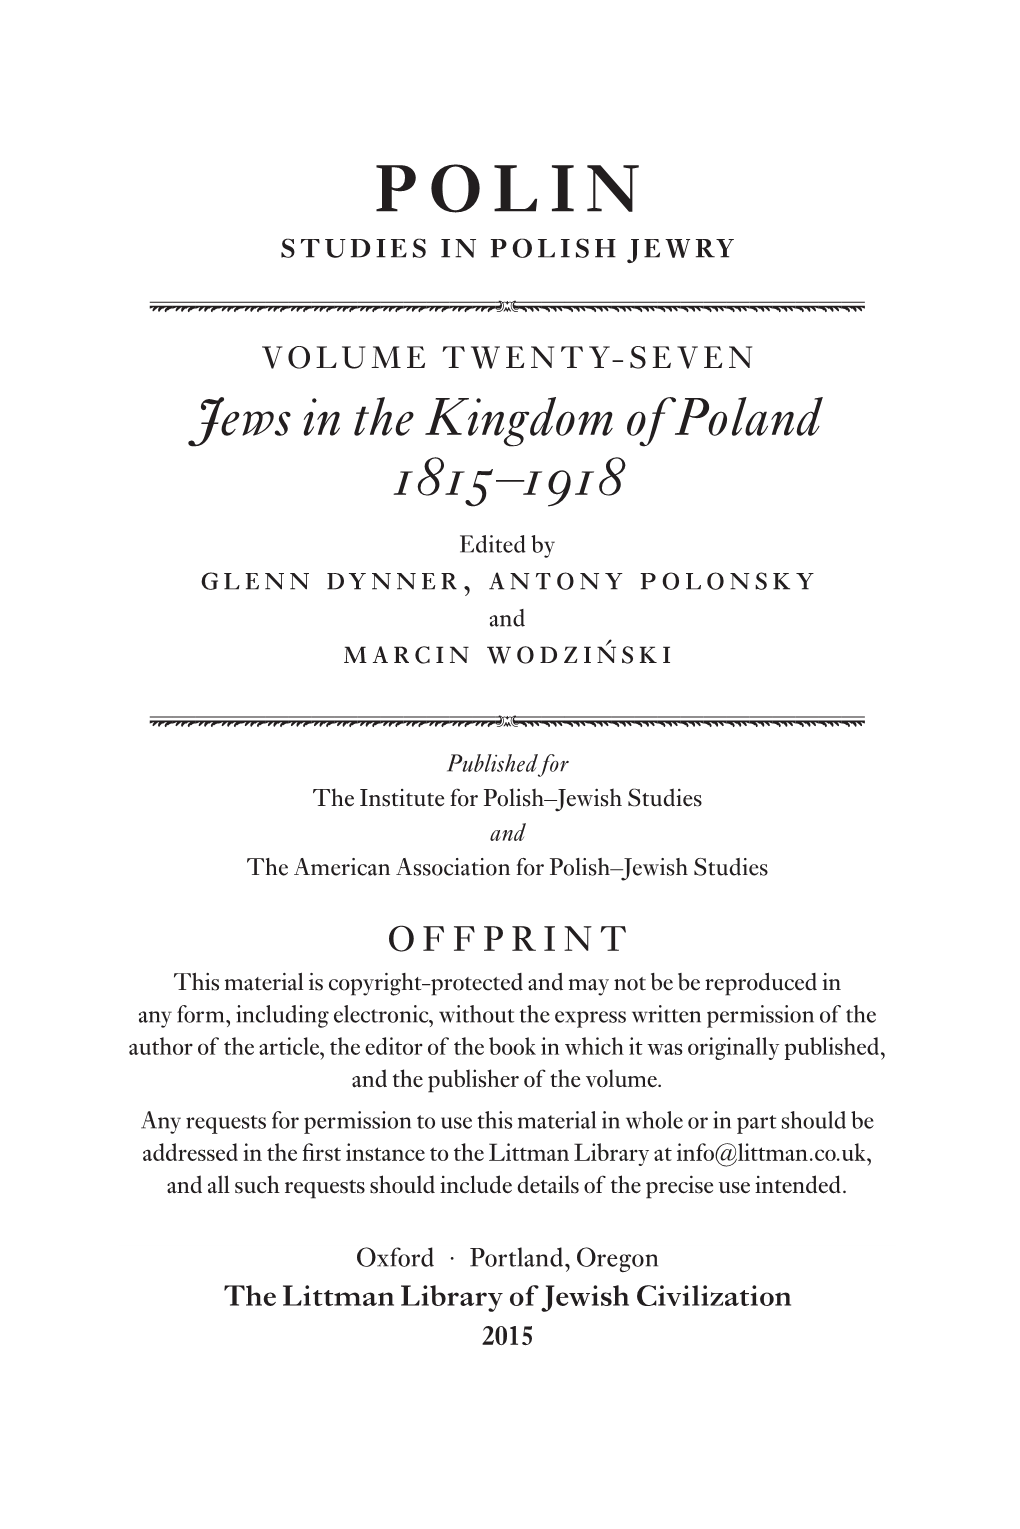 Jews in the Kingdom of Poland ‒